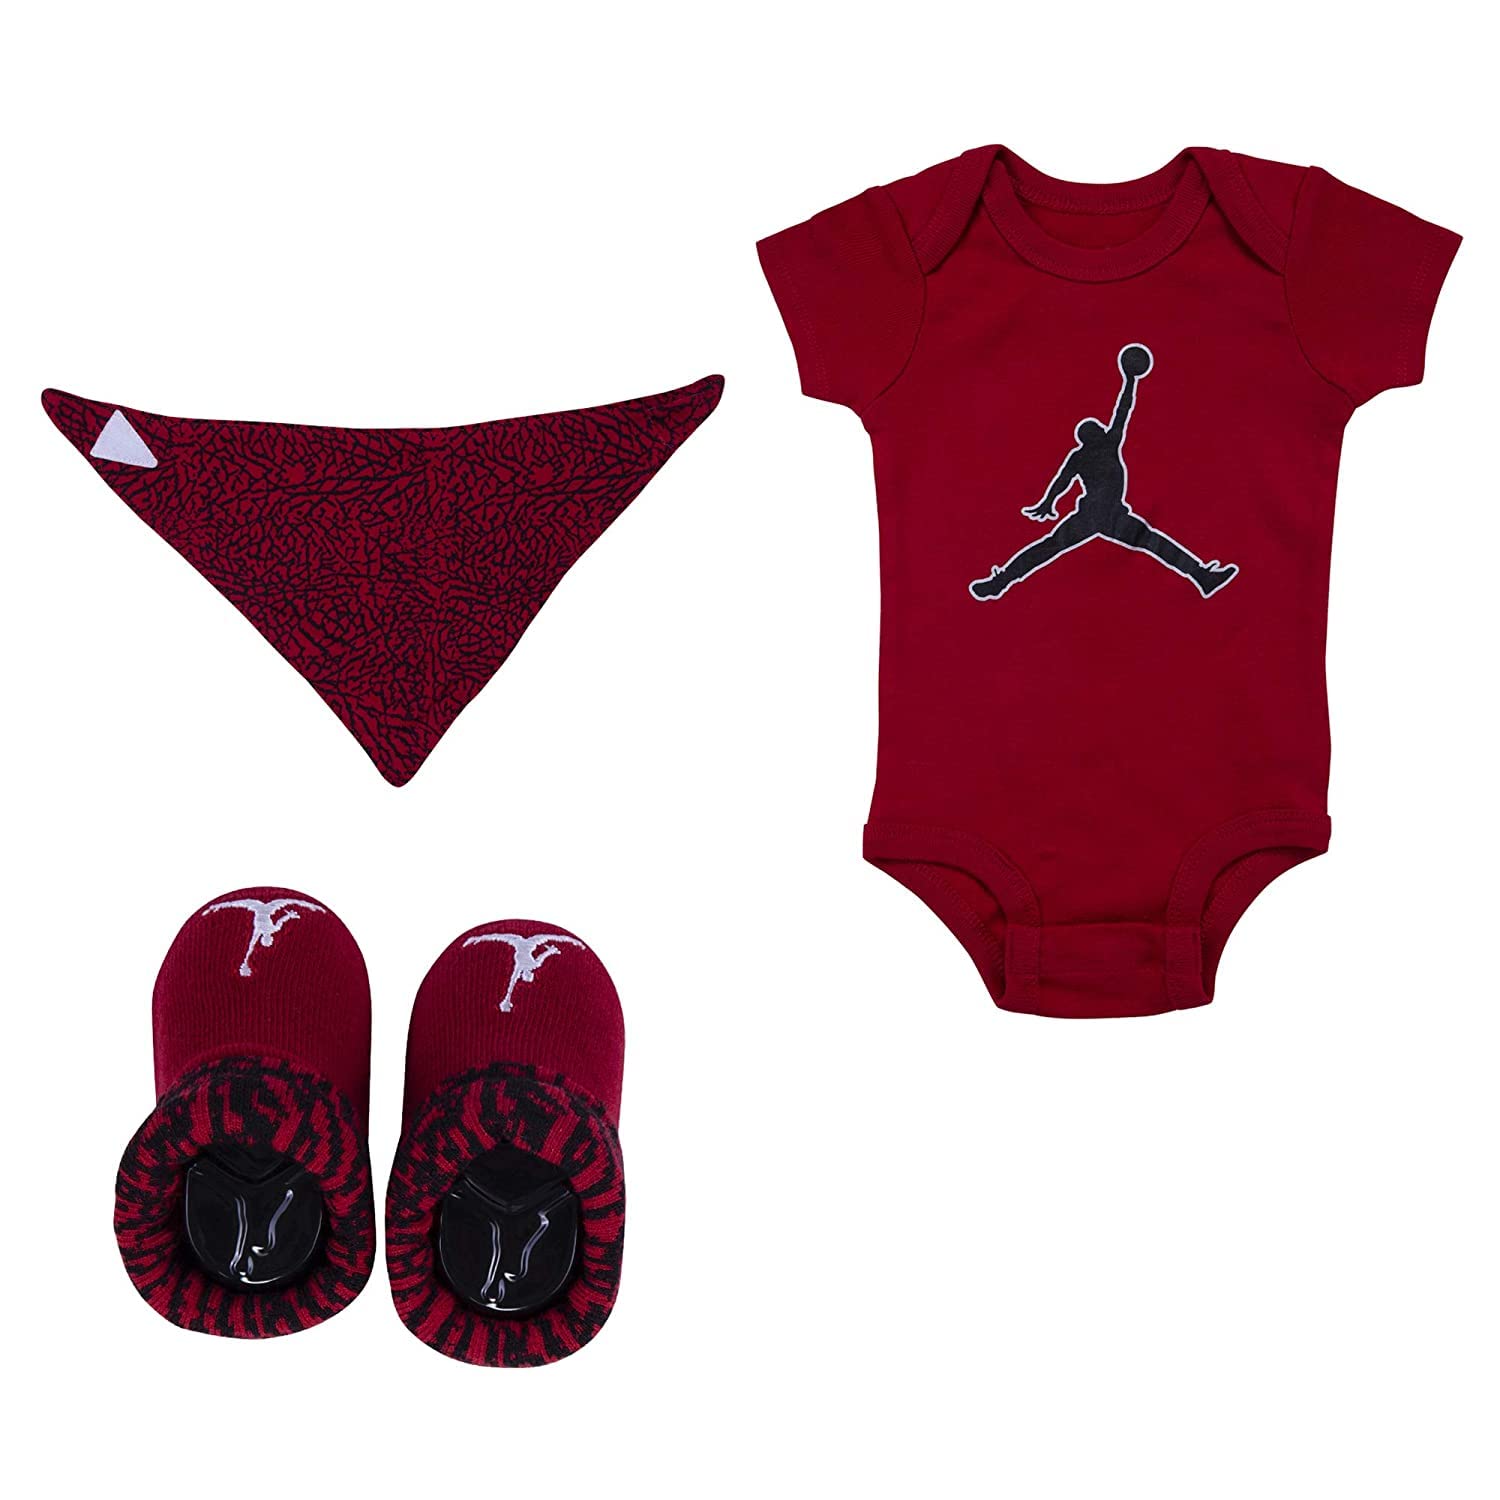 [LJ0083-R78] Baby Air Jordan Bodysuit, Bib and Booties 3-PC Box Set